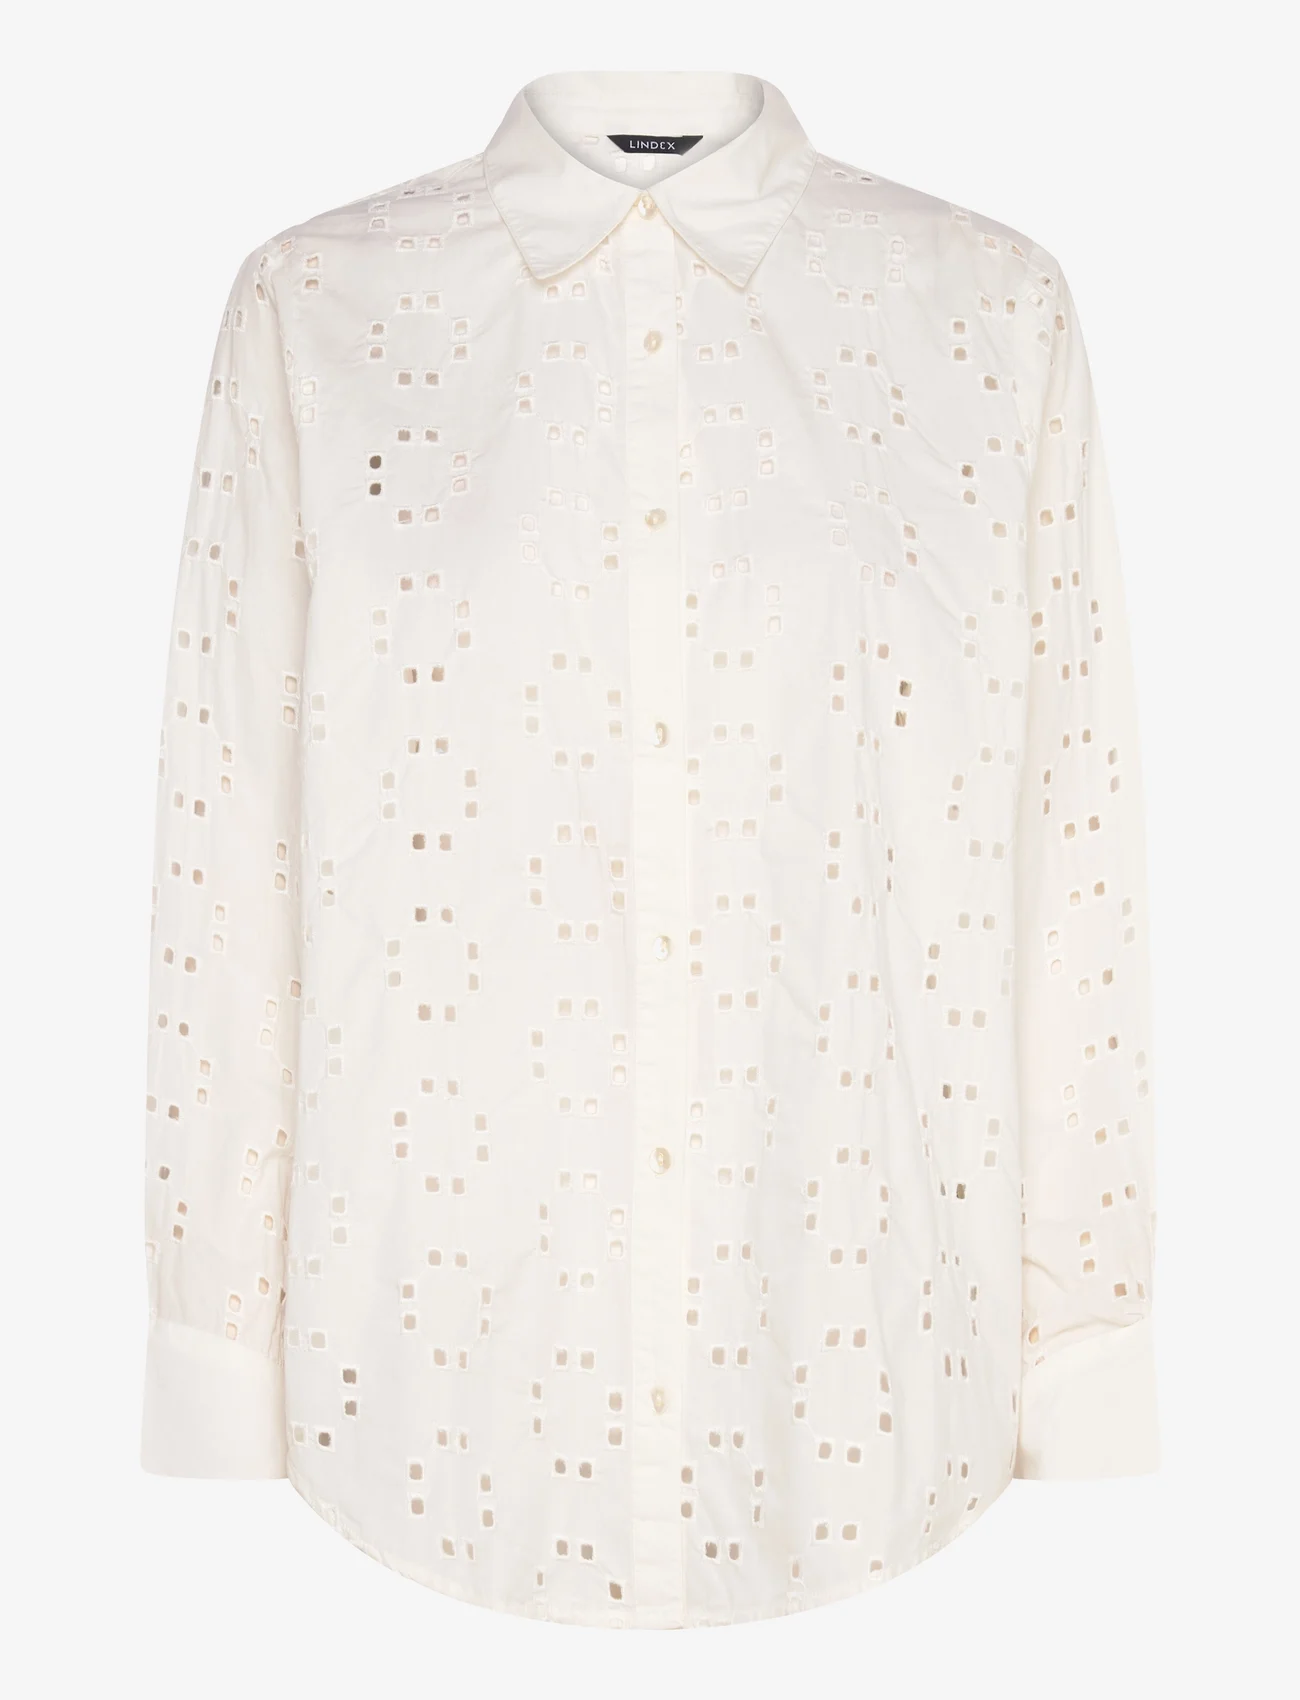 Lindex - Shirt Heidi - long-sleeved shirts - light white - 0